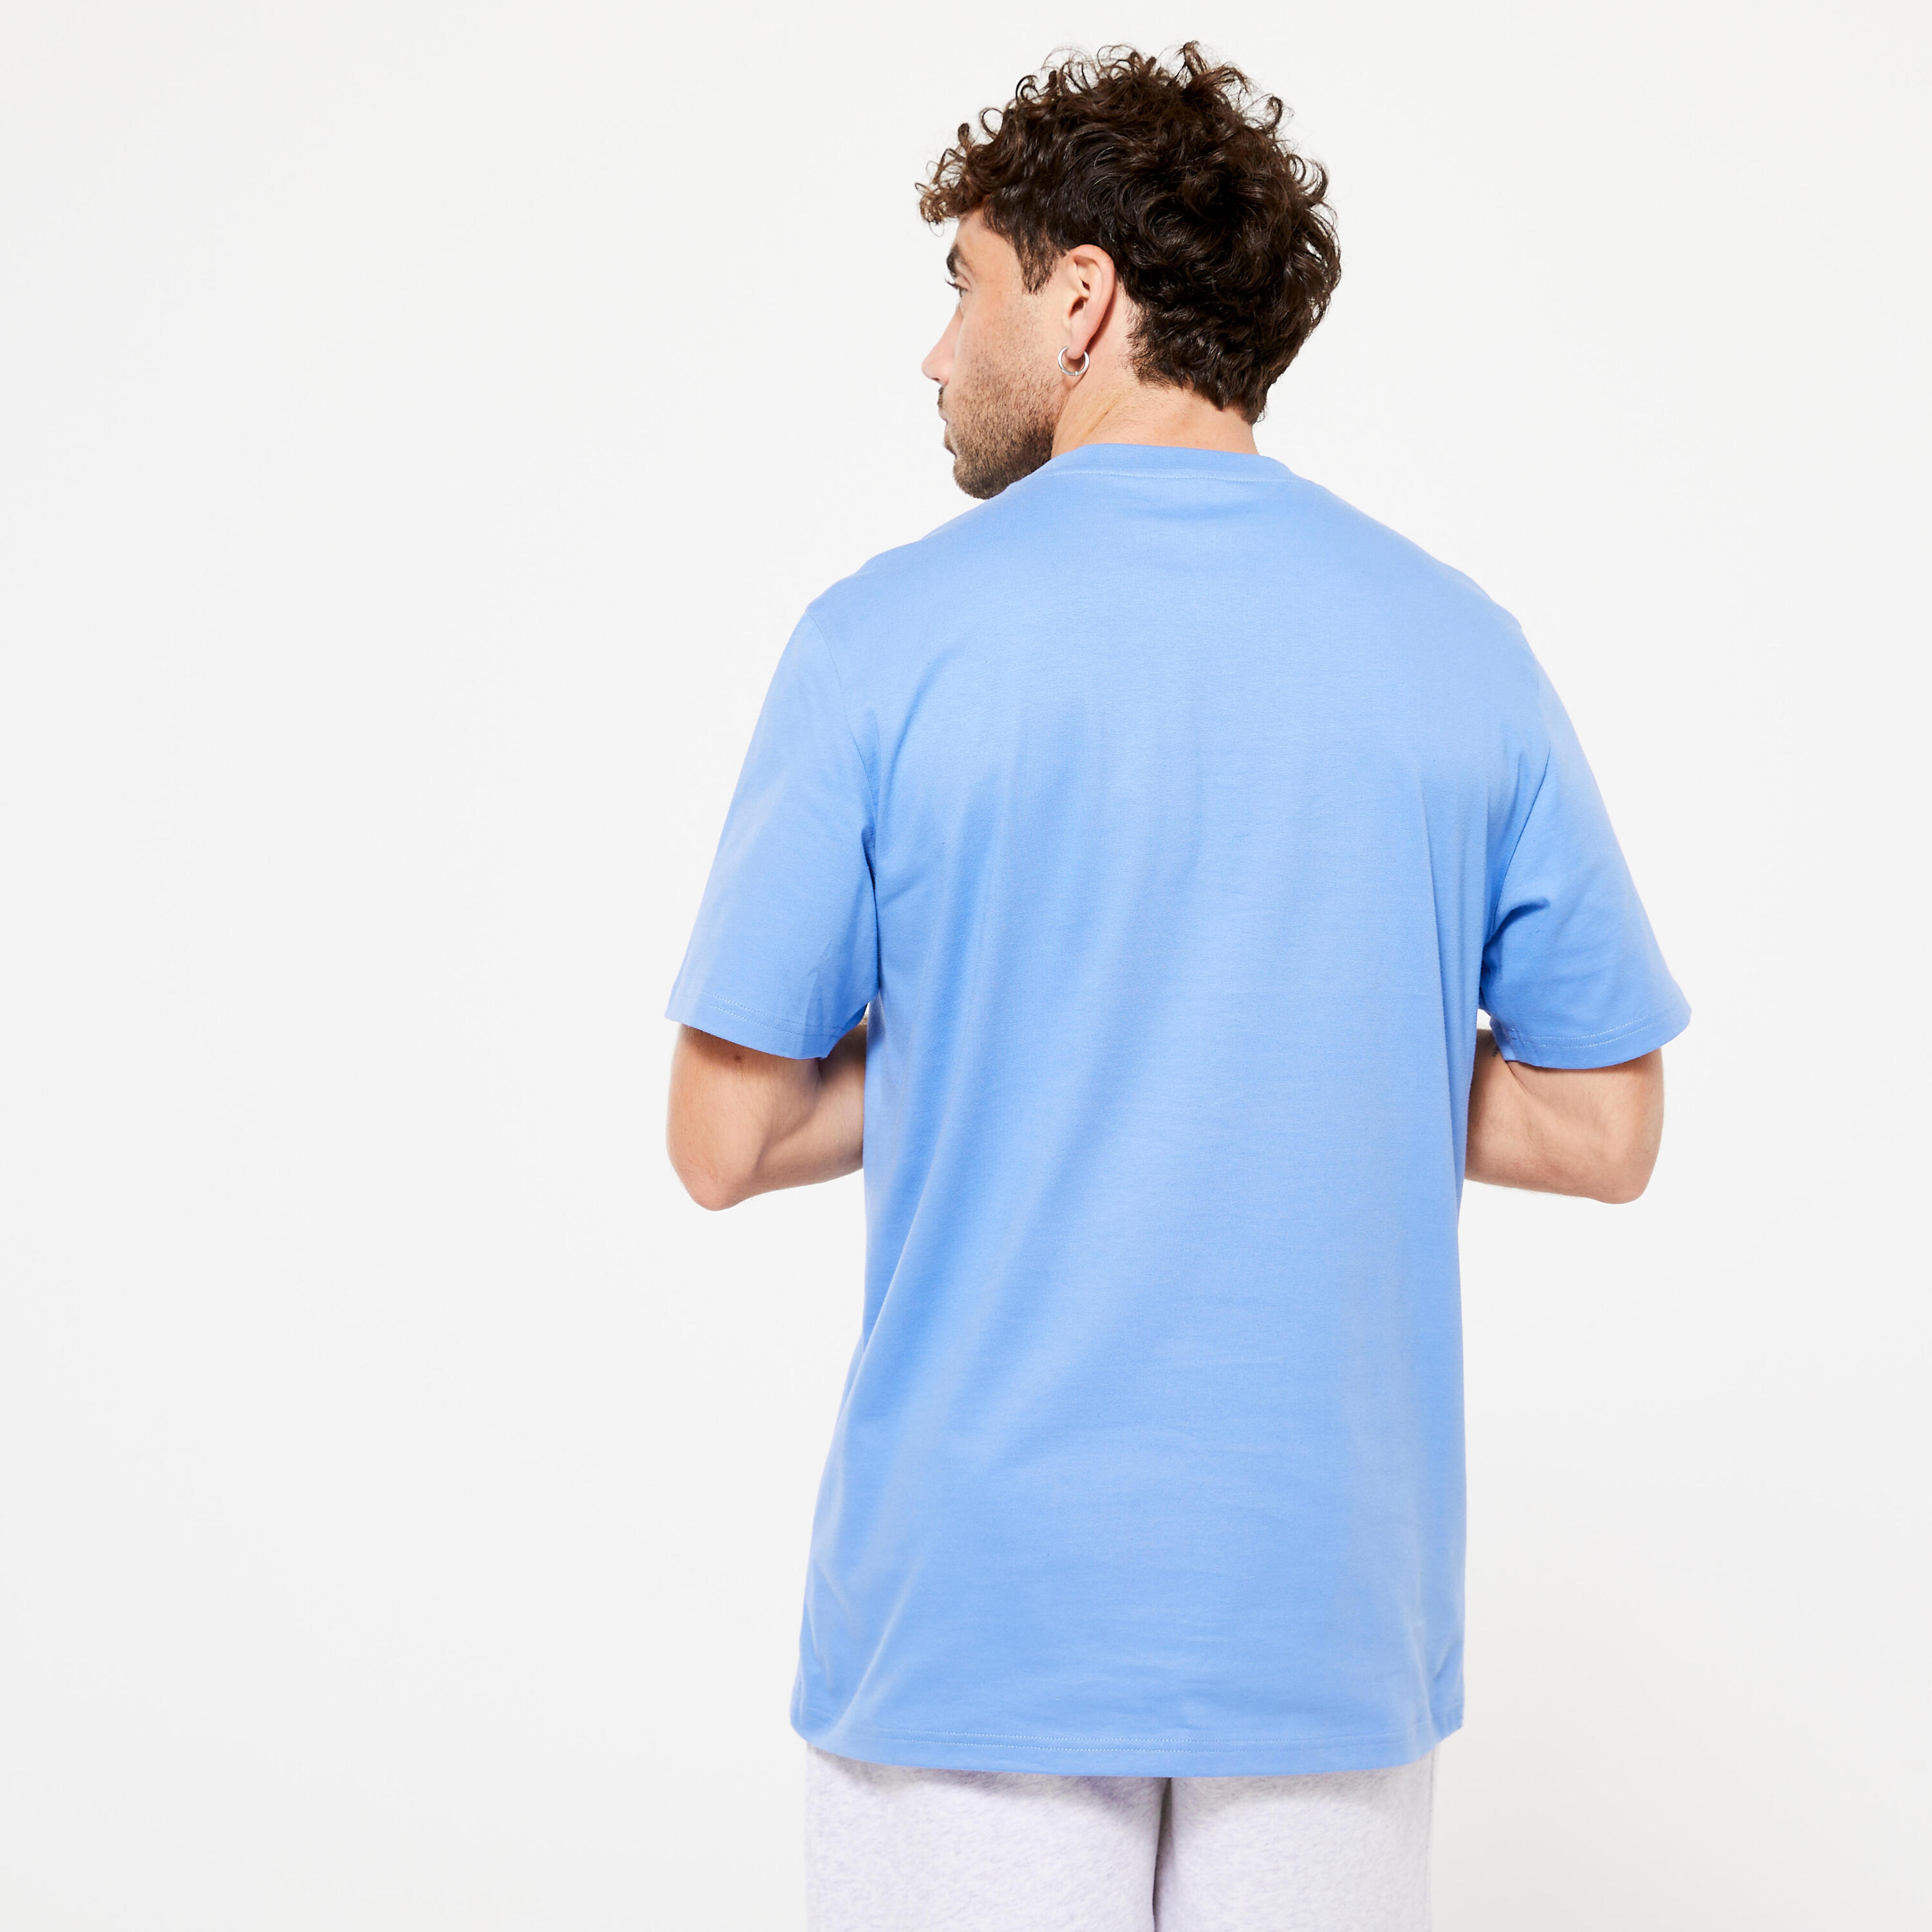 Men's Fitness T-Shirt 500 Essentials - Blue/Lavender Print 5/6